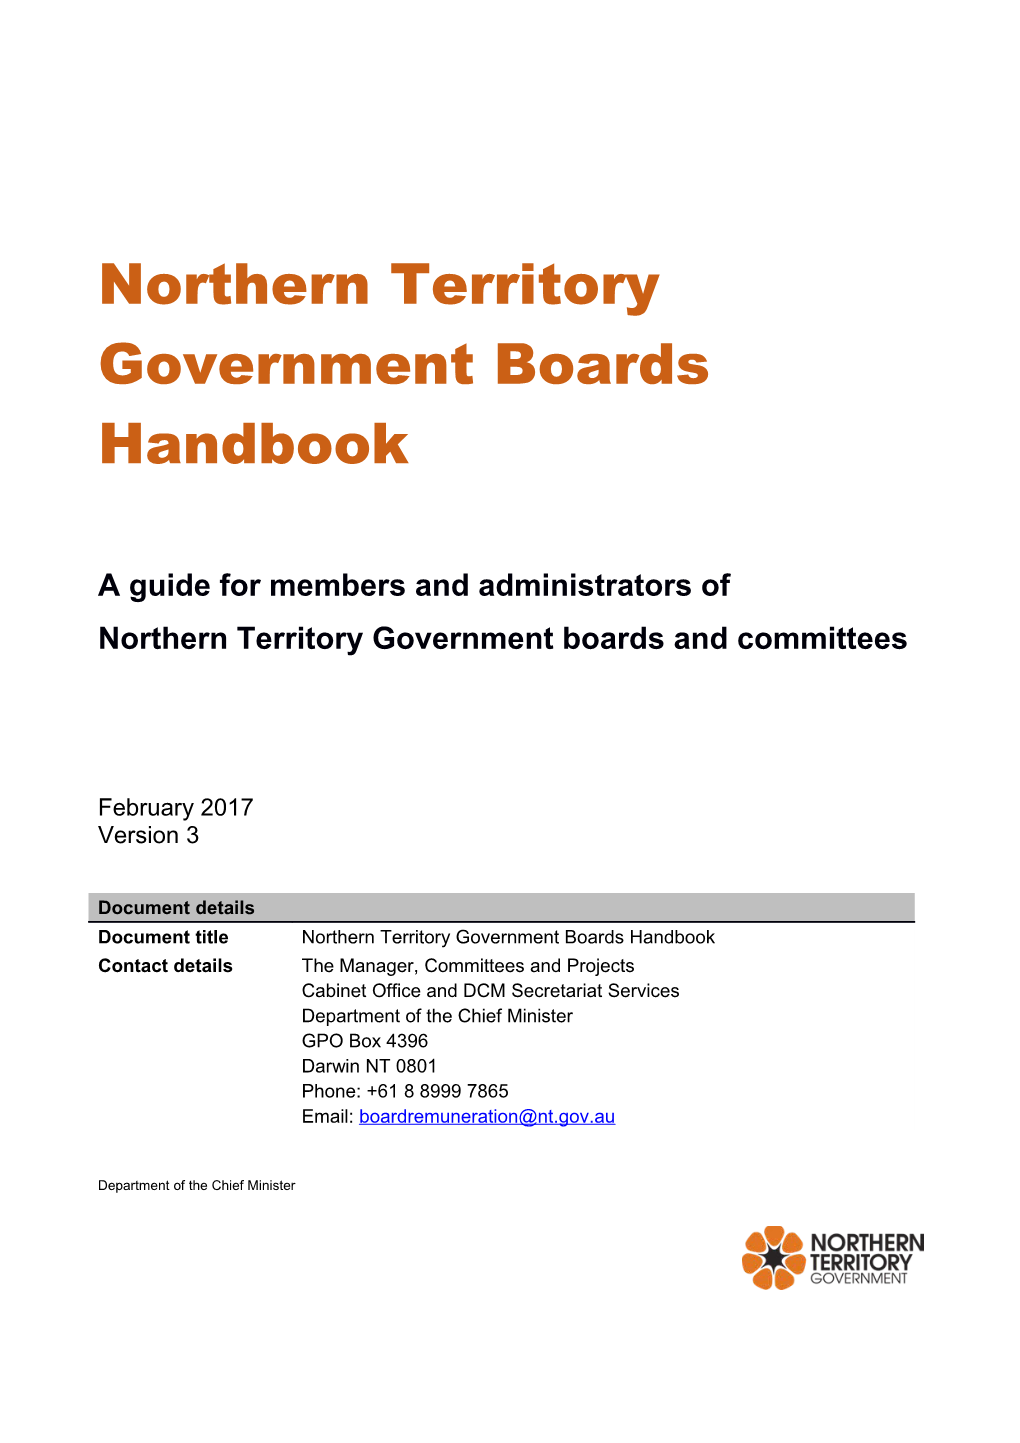 Northern Territory Government Boards Handbook